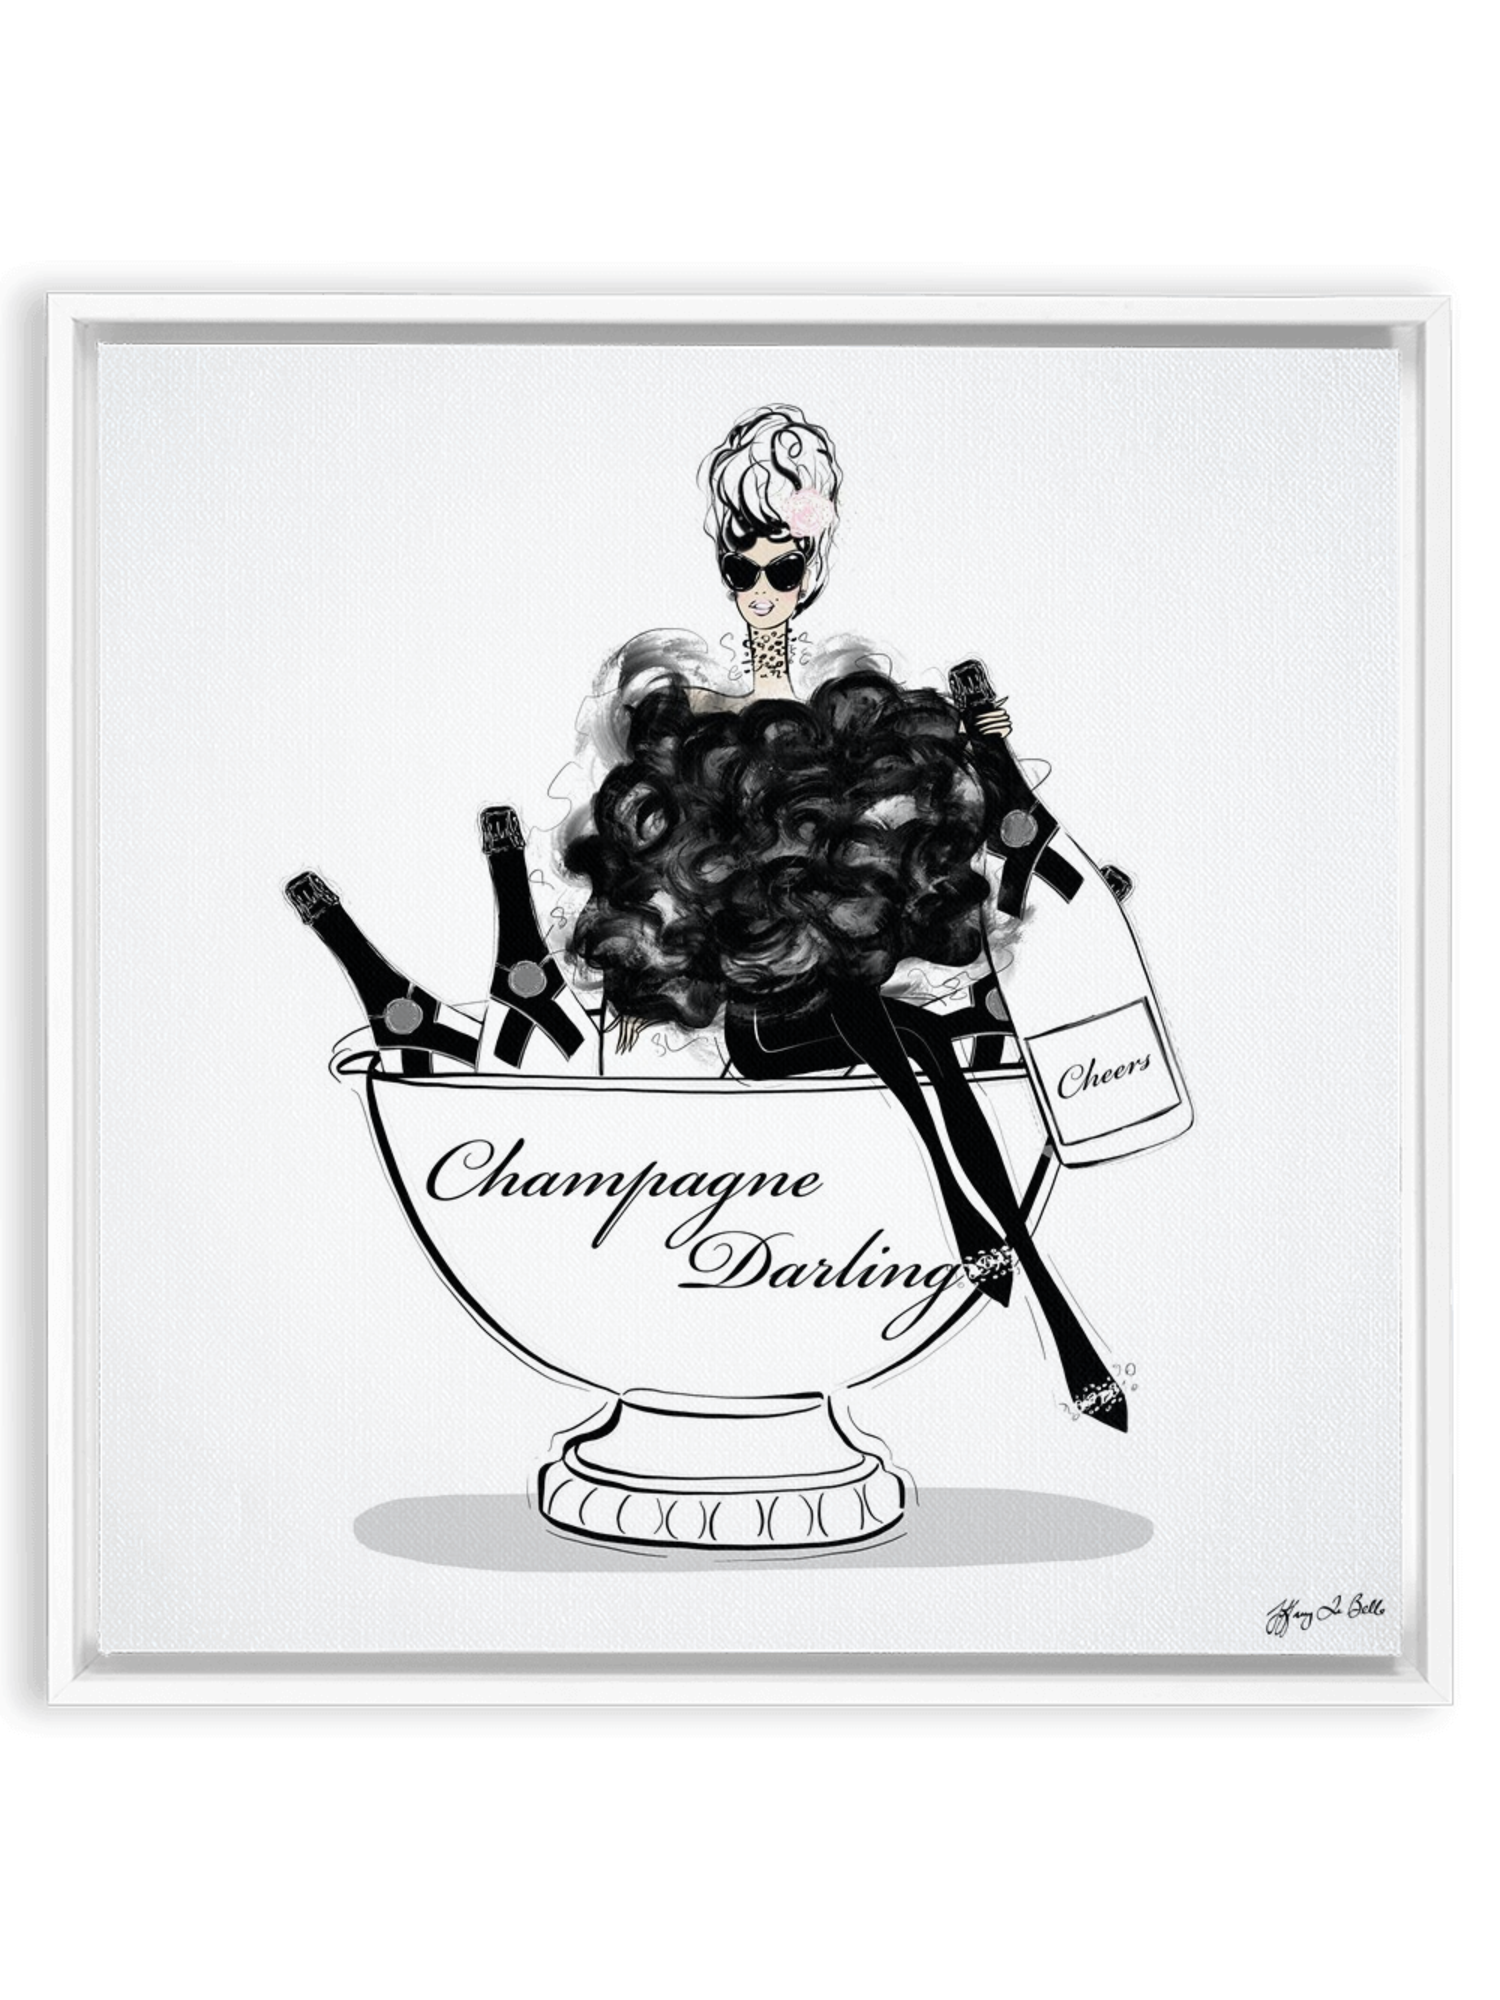 Champagne Darling - Illustration - Canvas Gallery Print - Unframed